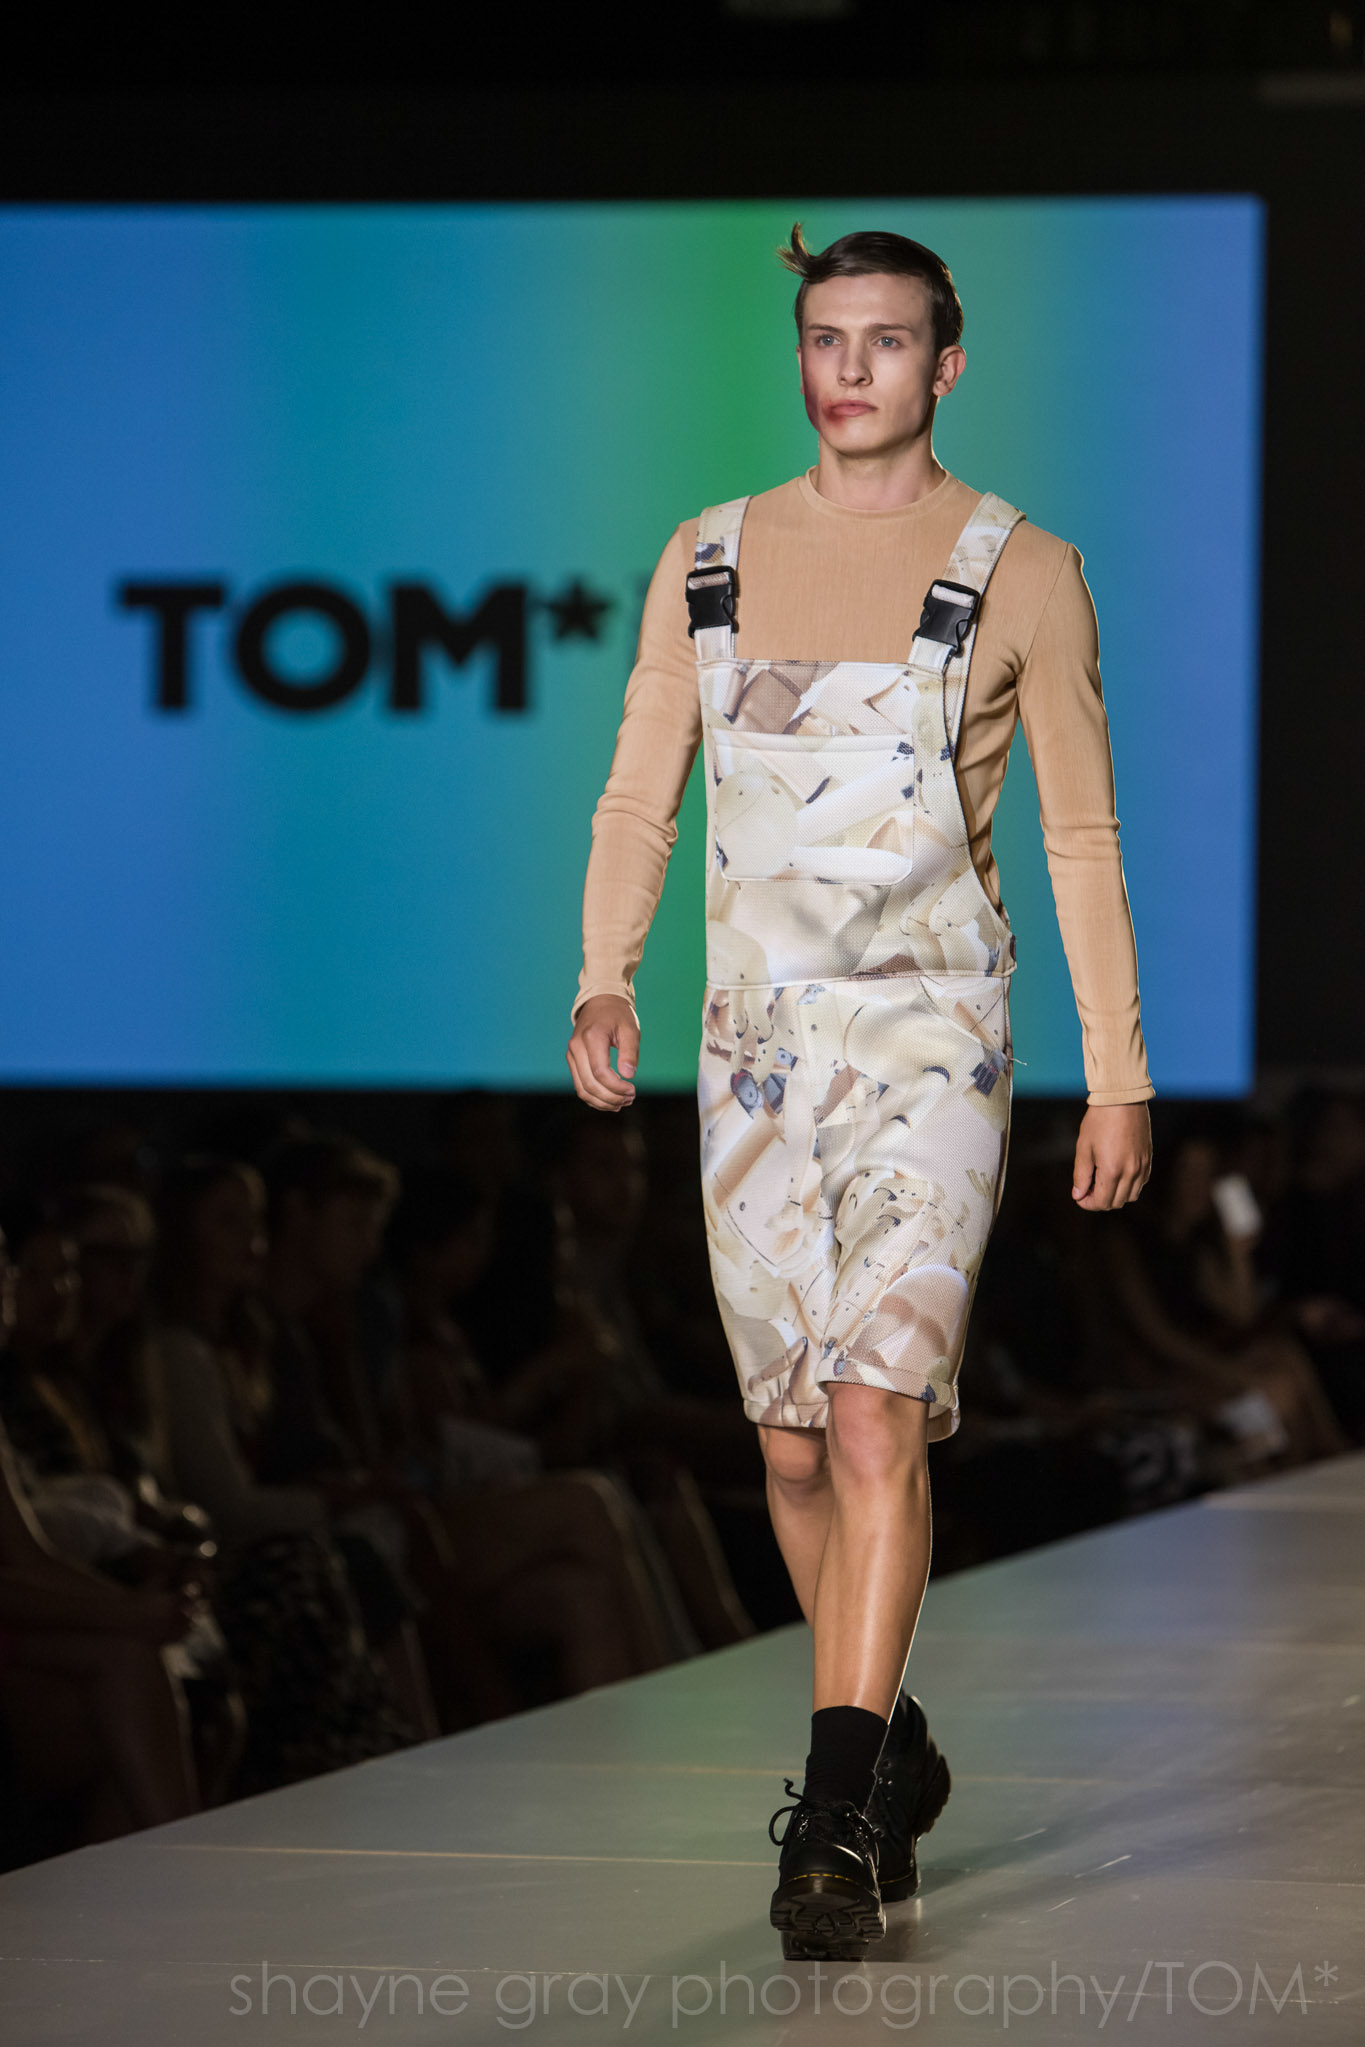 Shayne-Gray-Toronto-men's-fashion_week-TOM-lafaille-7636.jpg